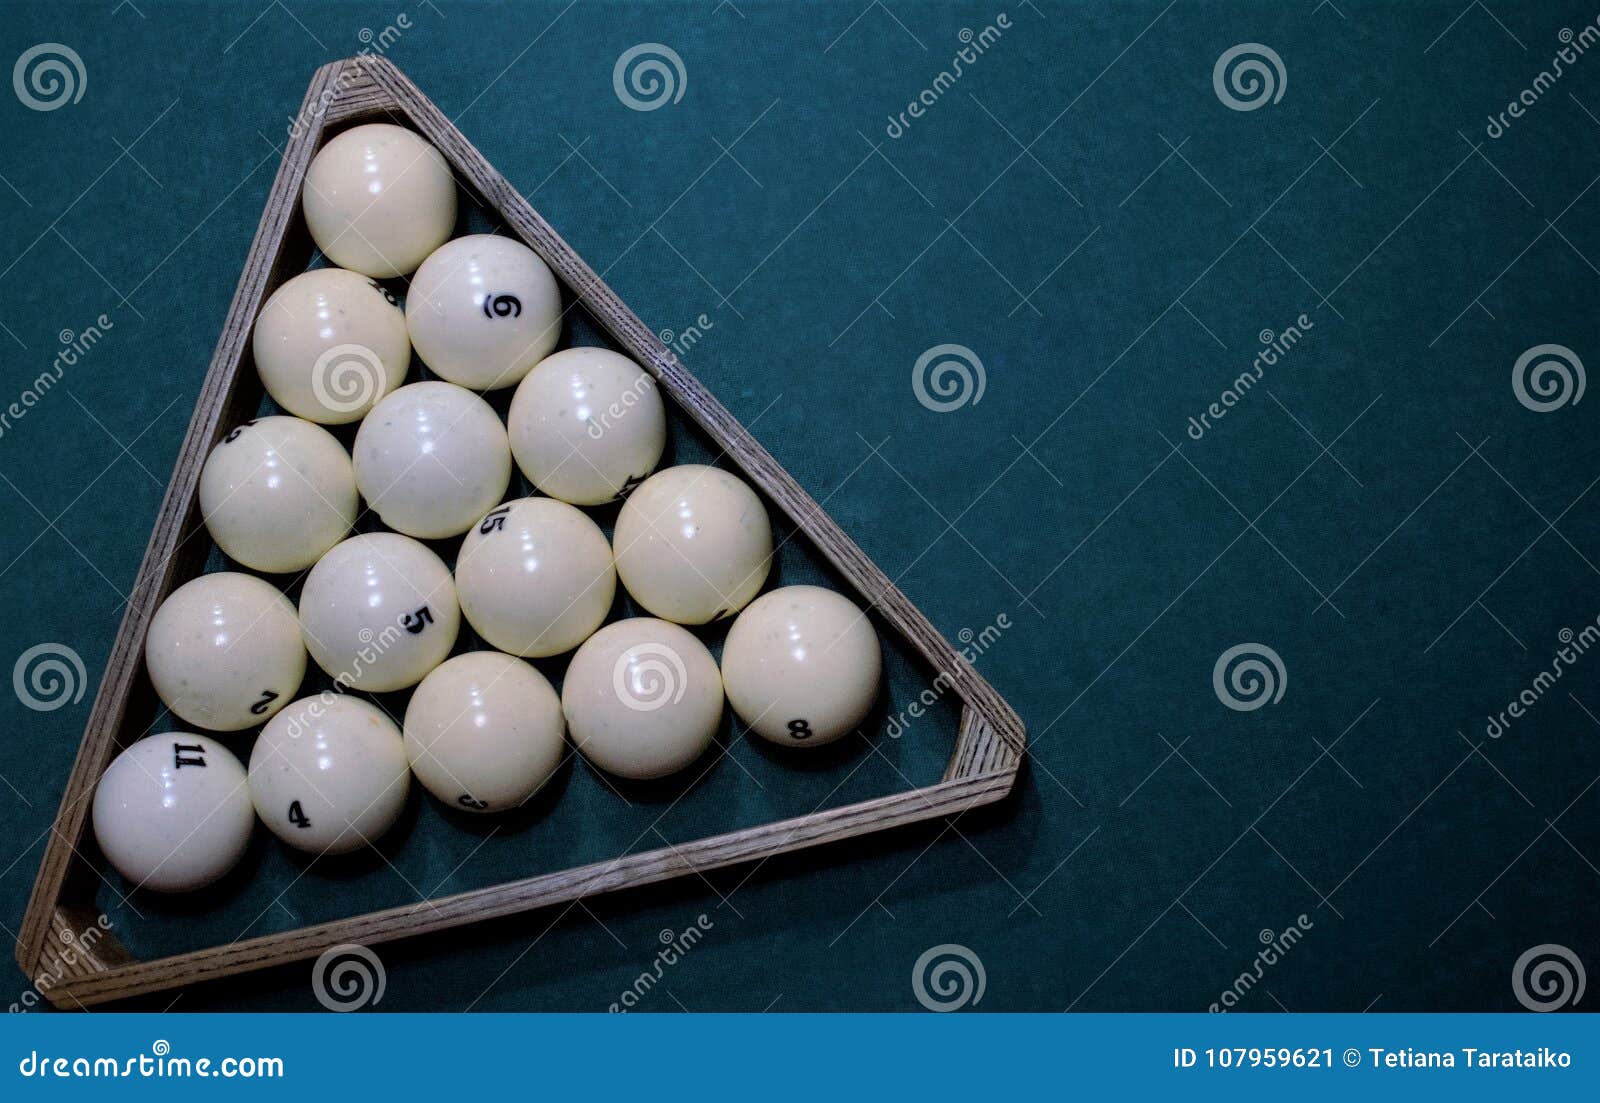 Russian Billiard Balls Triangle Stock Image - Image of balls, snooker ...